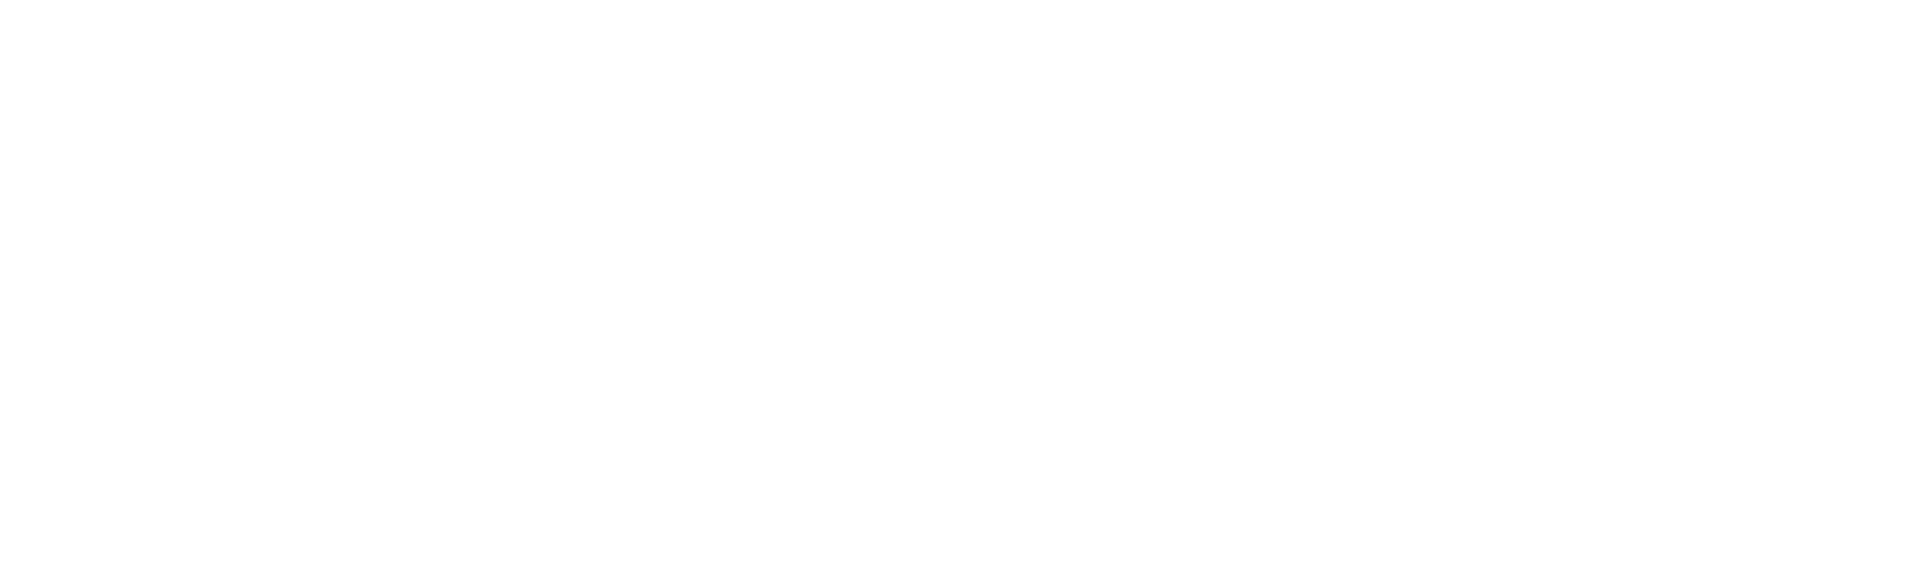 AAPA Test Small Logo